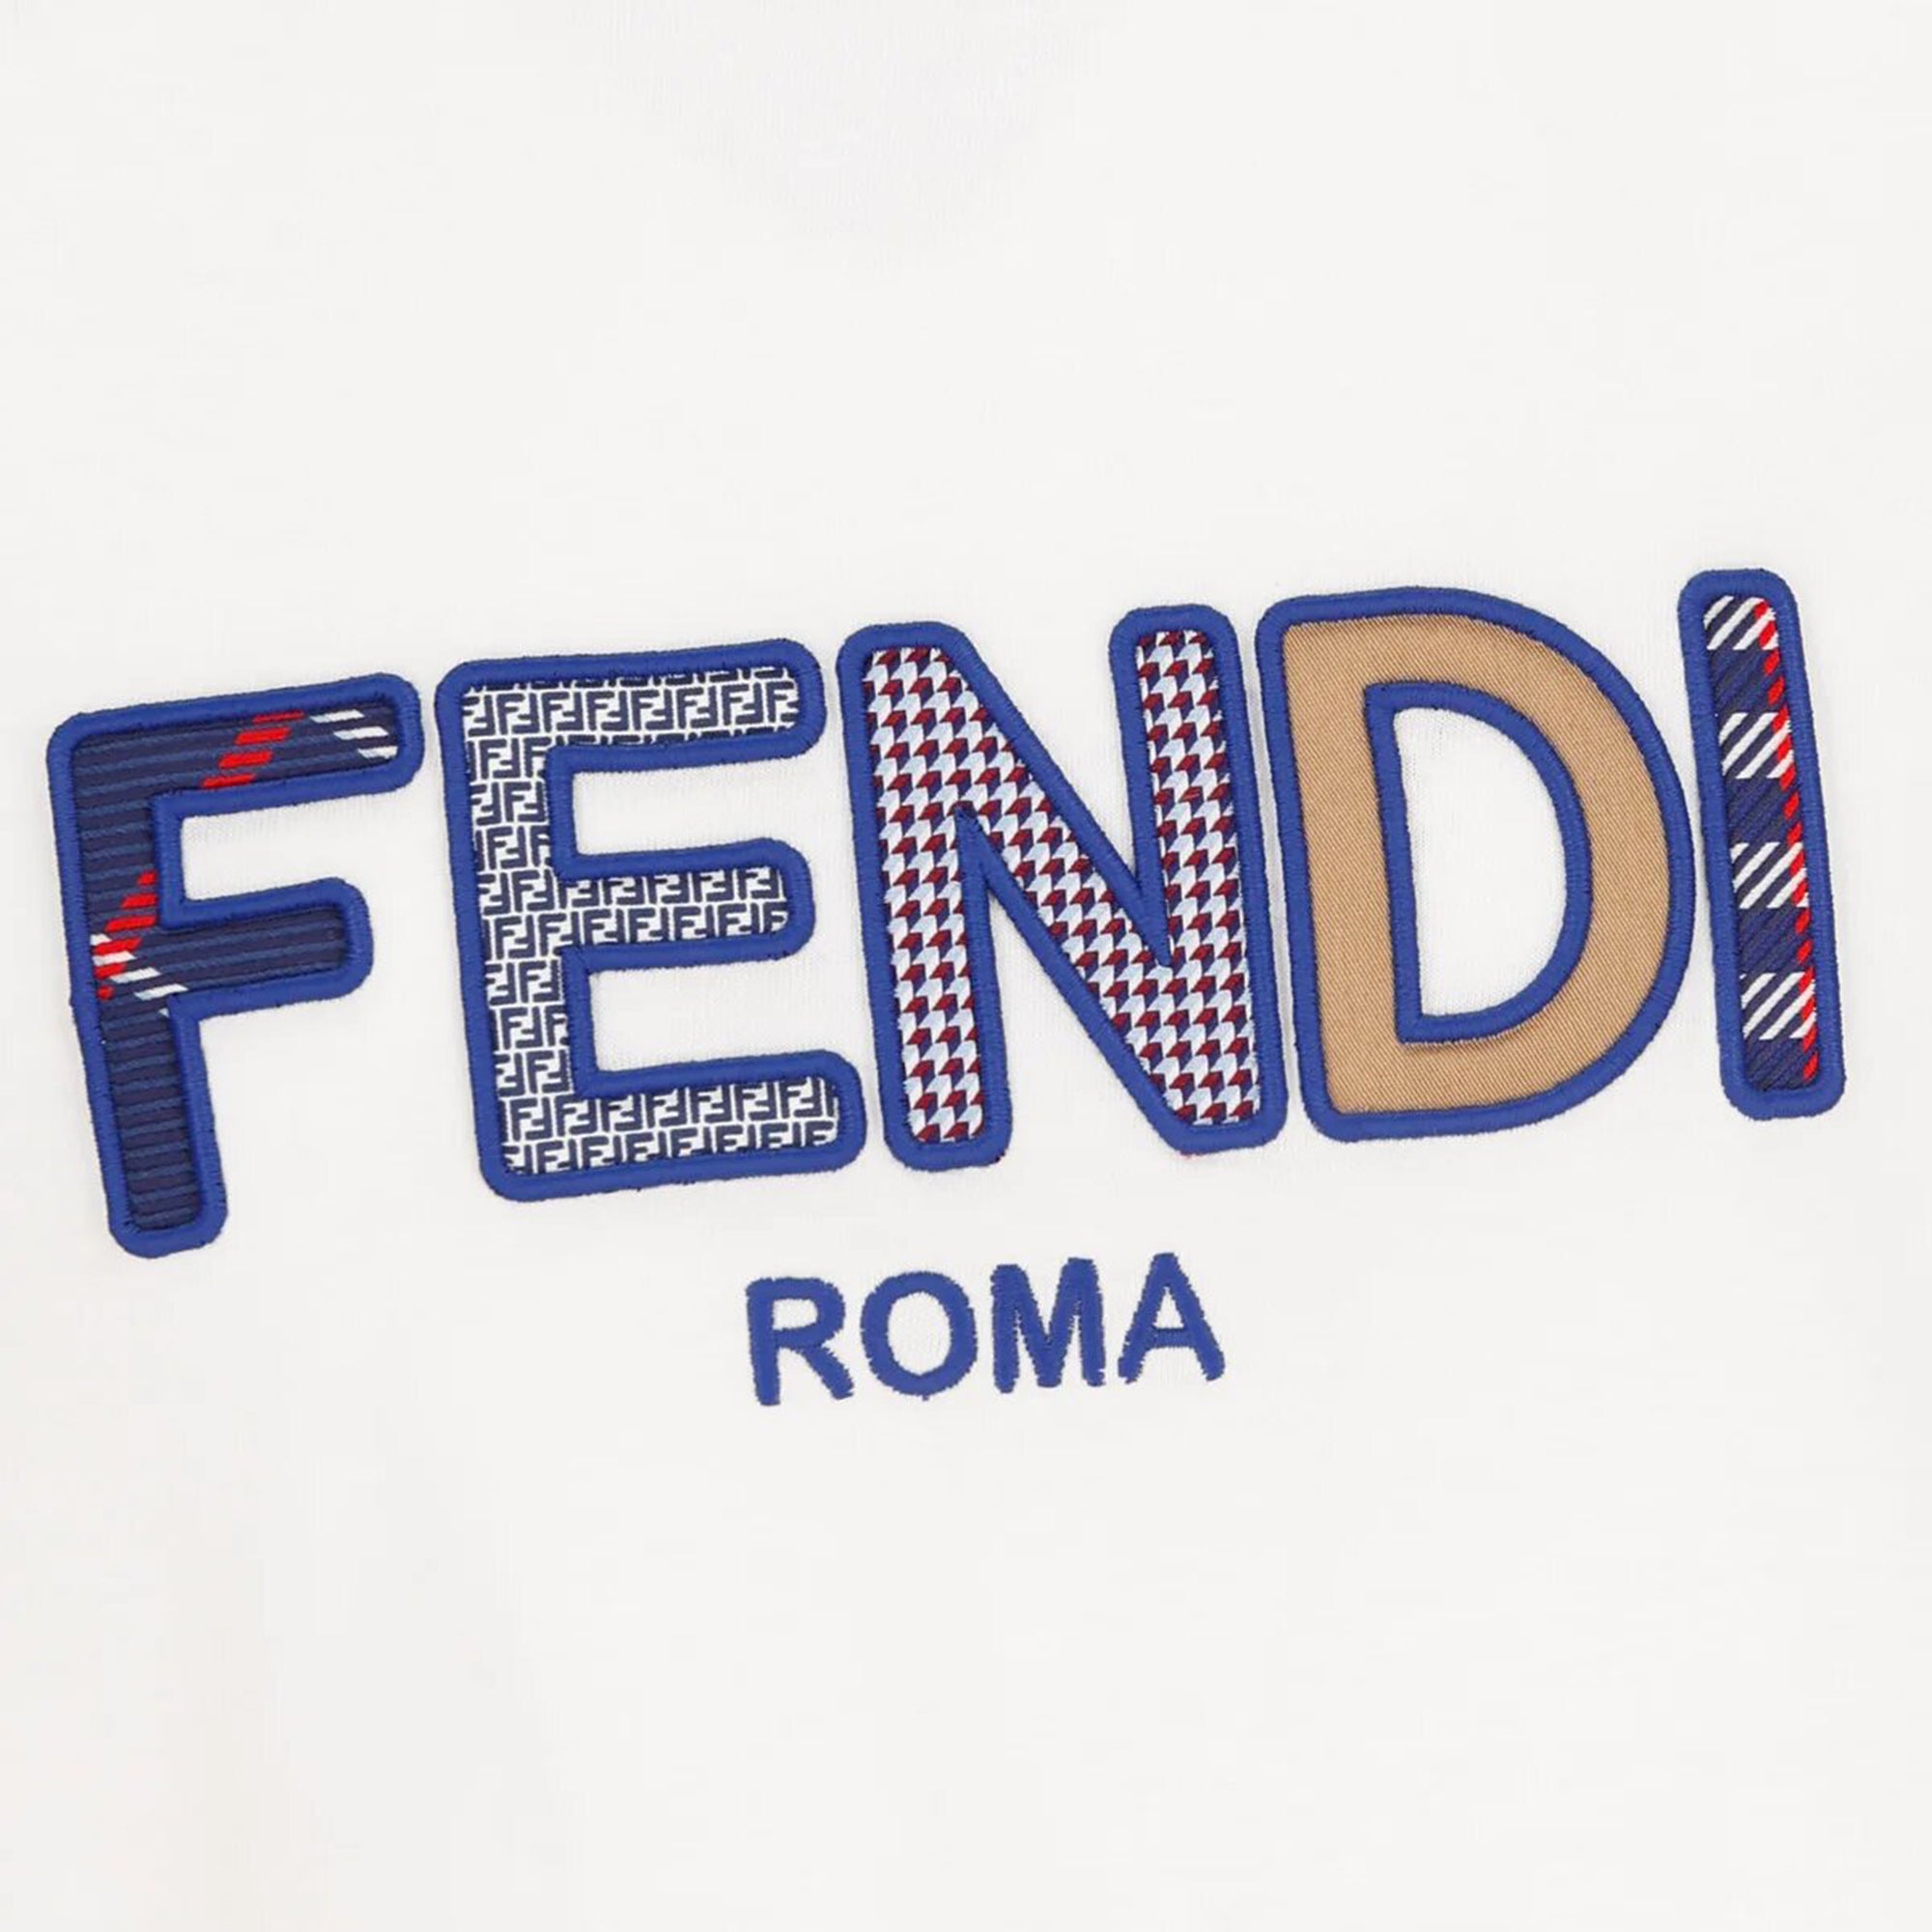 Fendi Unisex Logo T-shirt White